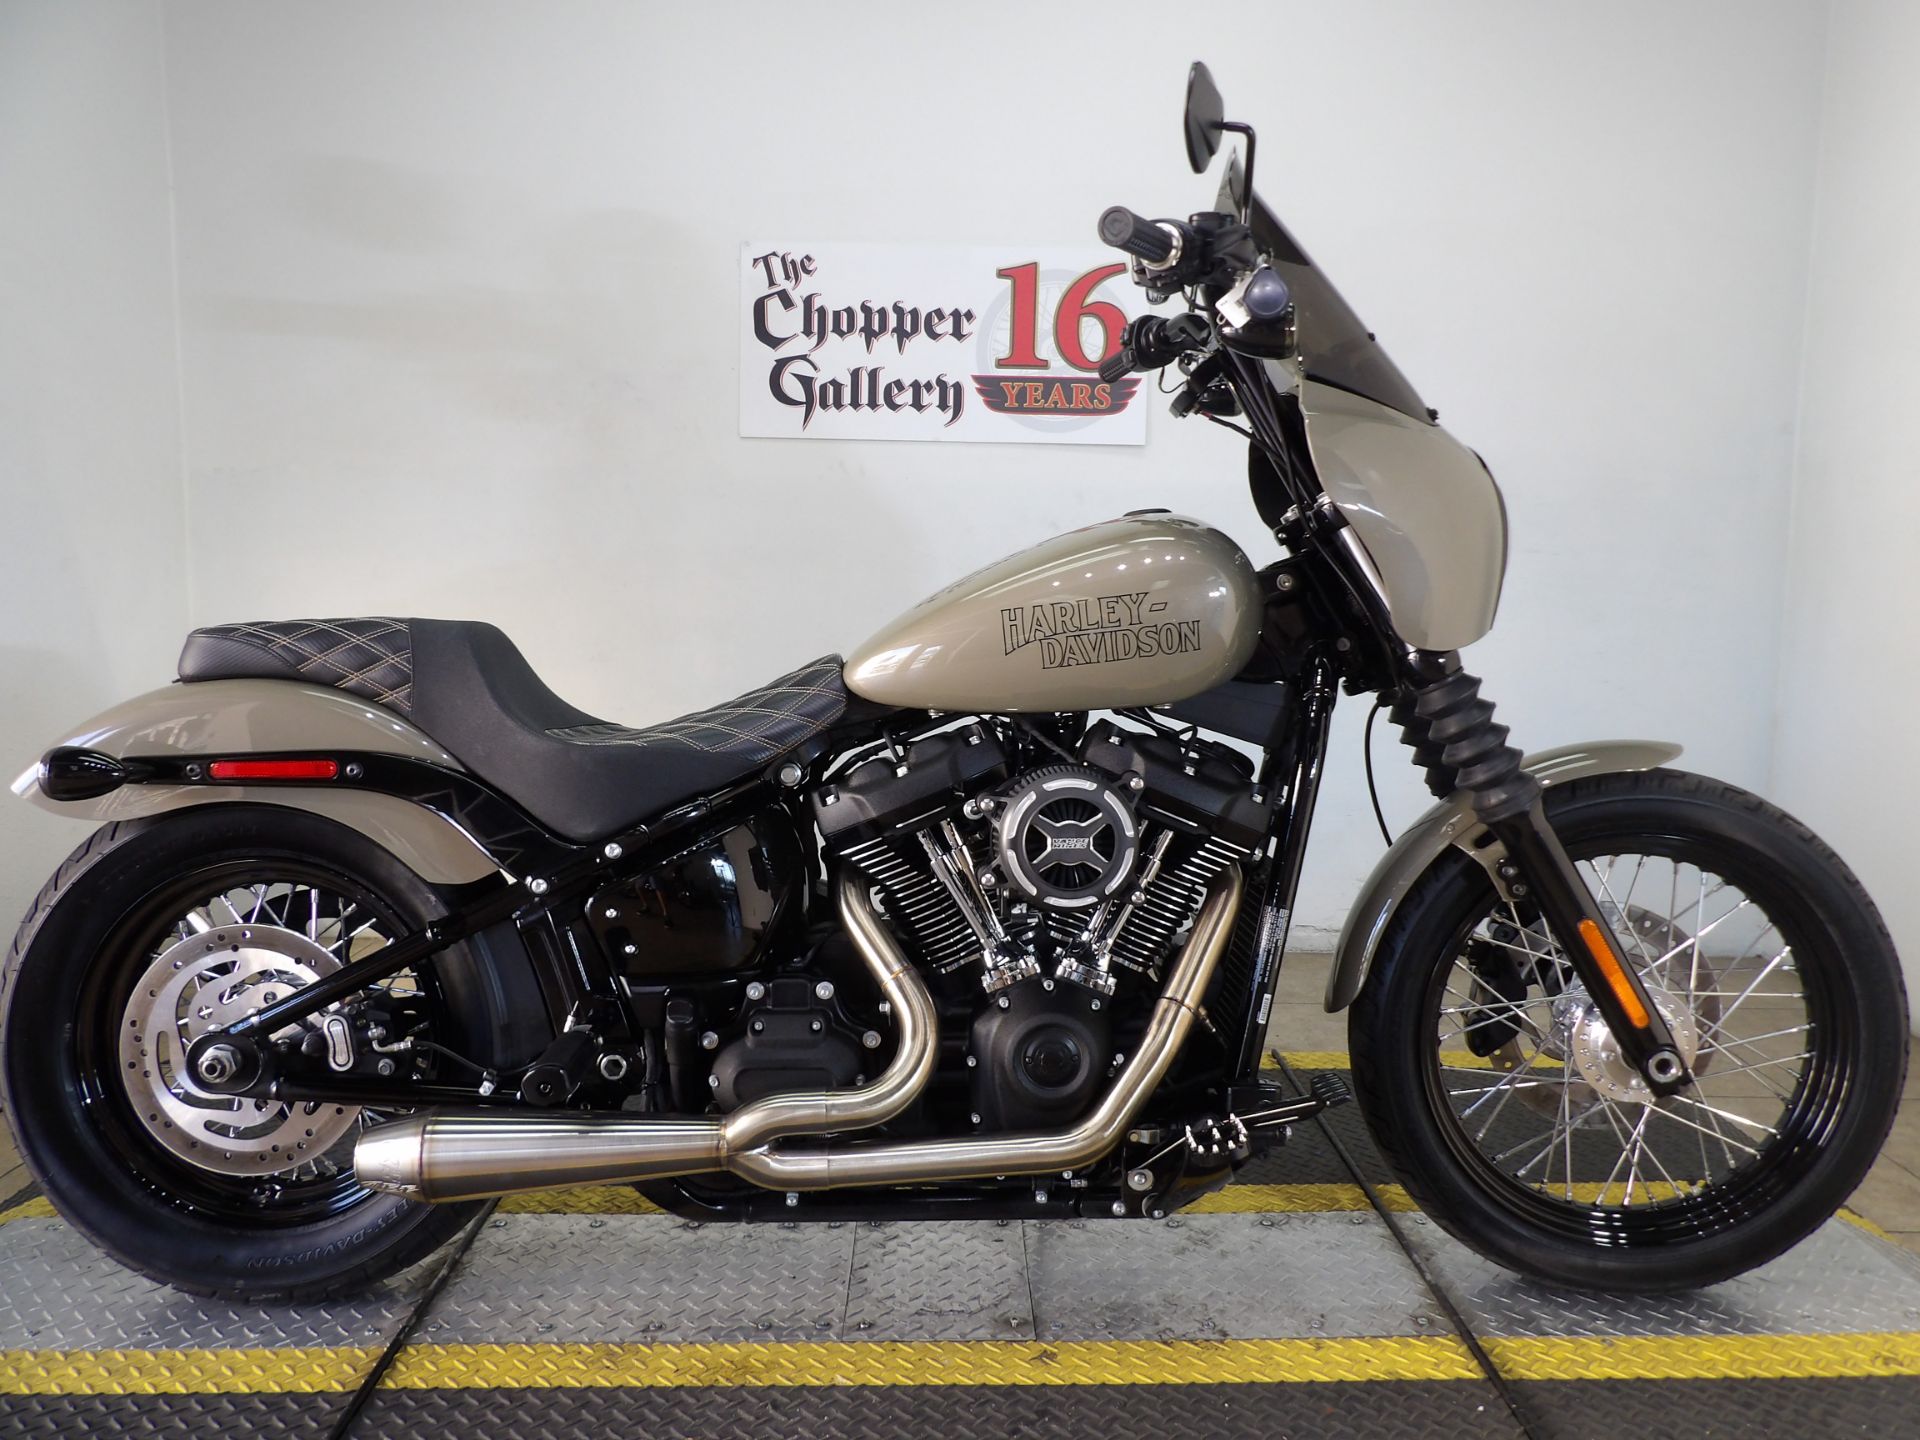 2021 Harley-Davidson Street Bob® 114 in Temecula, California - Photo 3